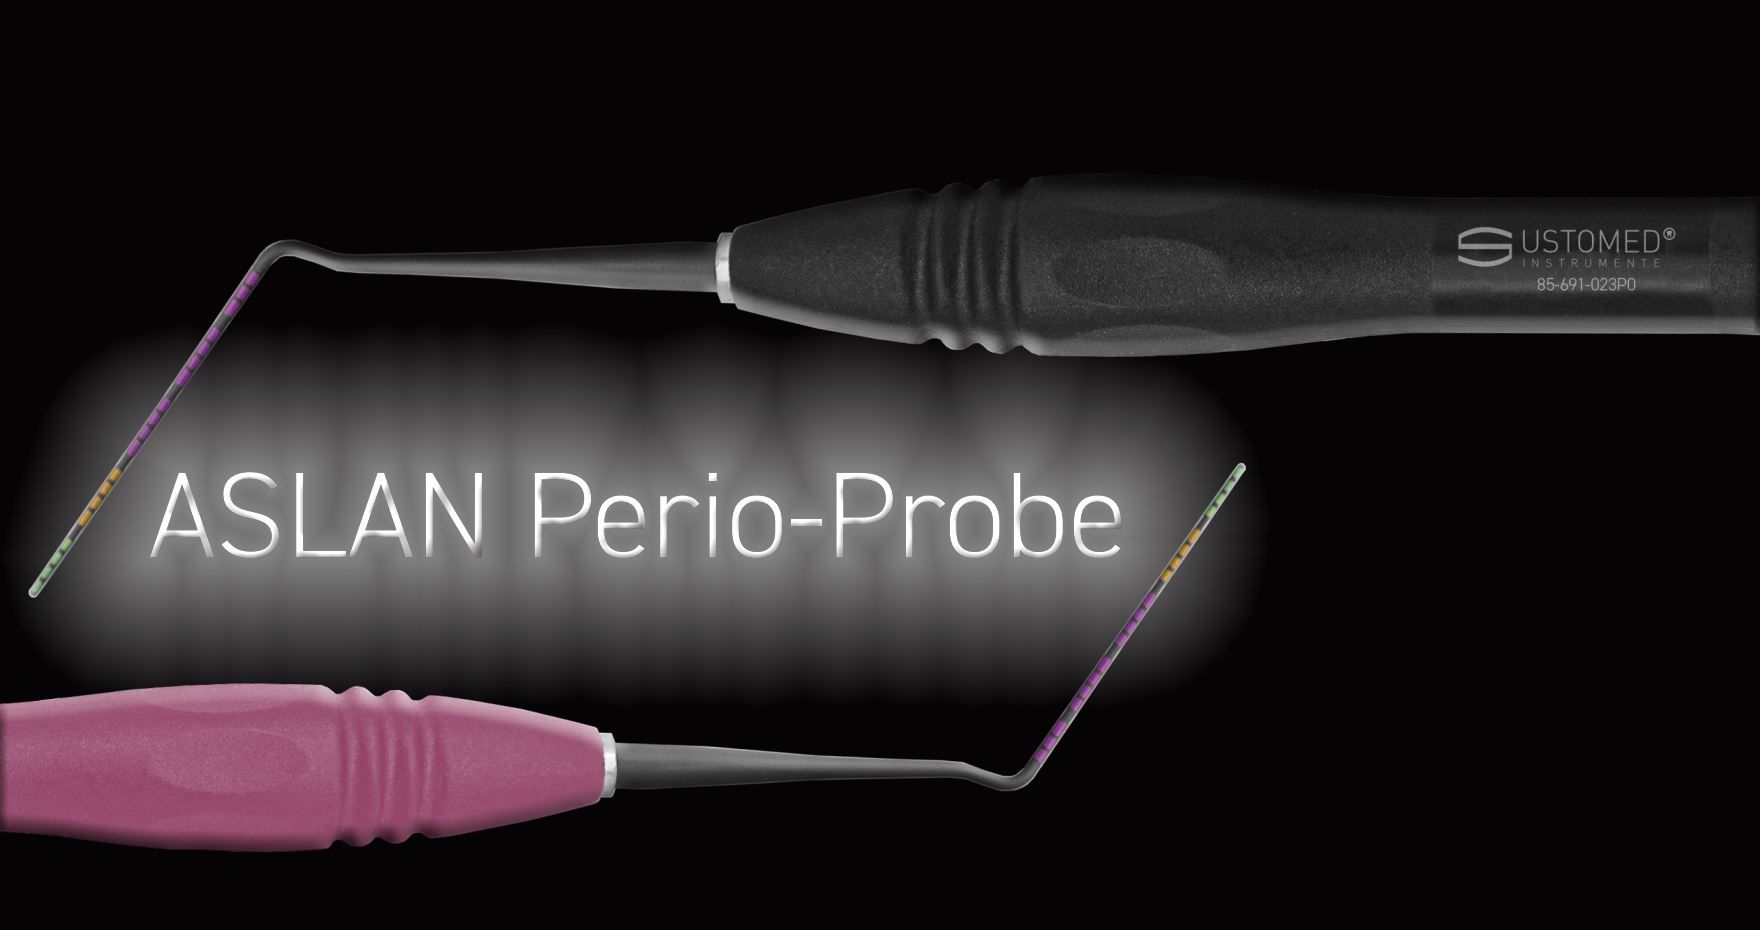 ASLAN Perio-Probe with color marking